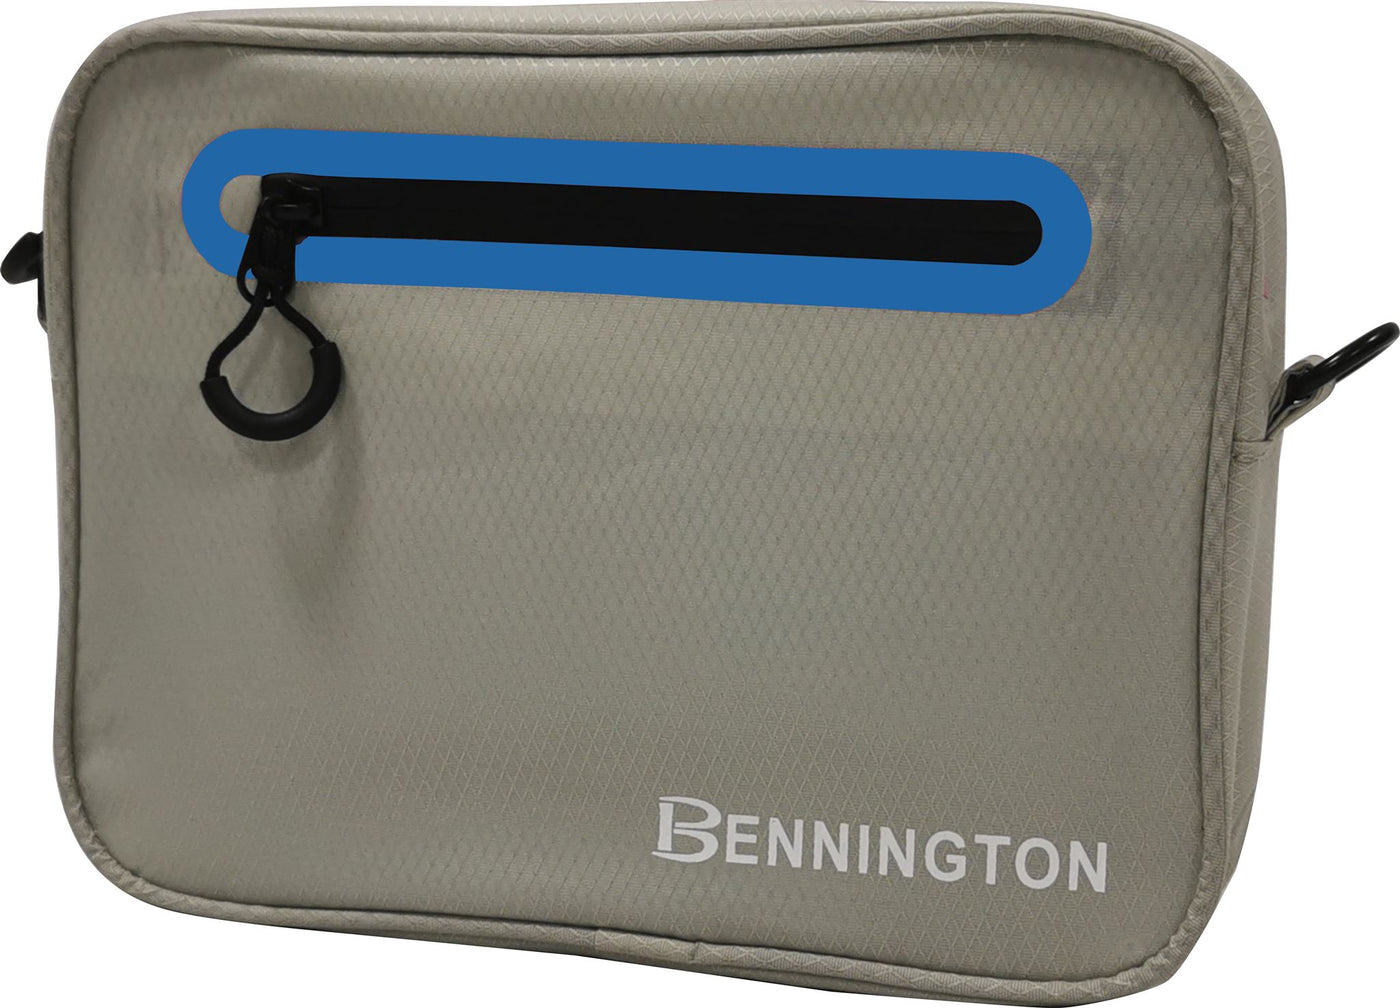 BENNINGTON POUCH BAG